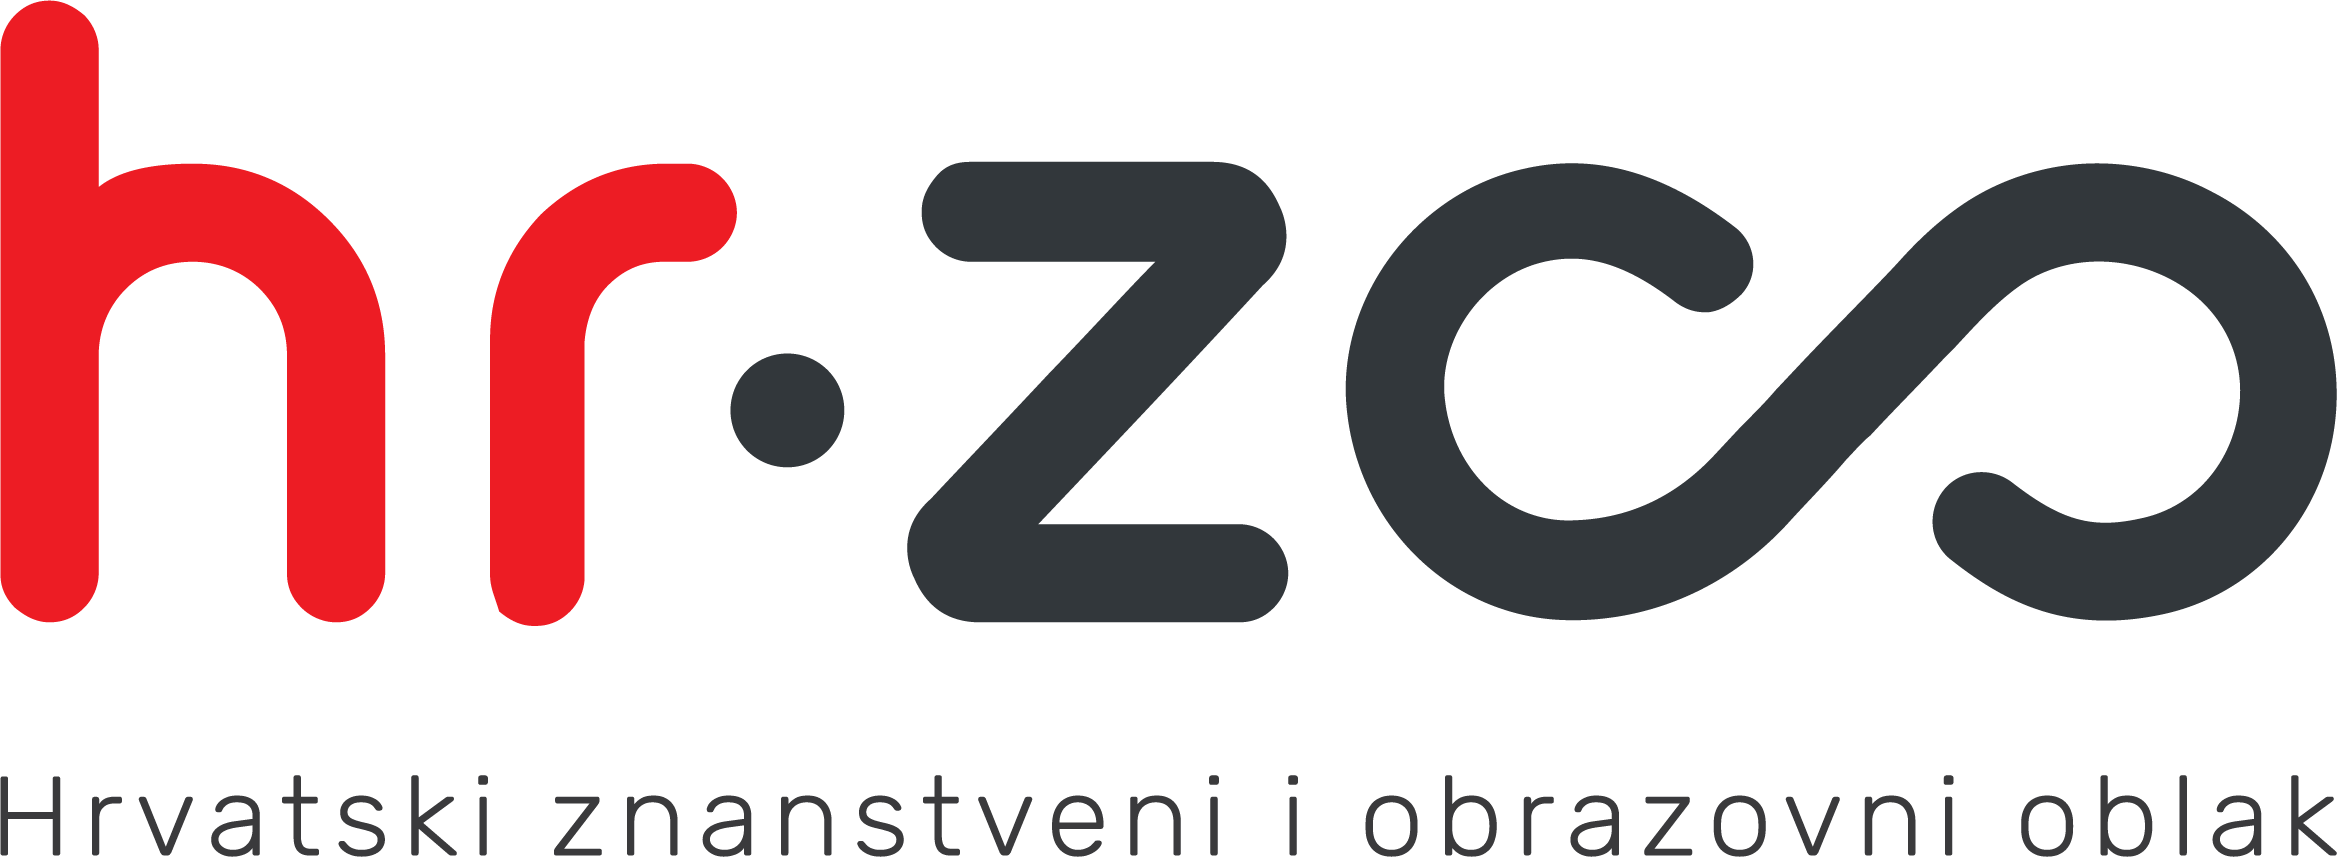 horizontalni logo HR-ZOO color